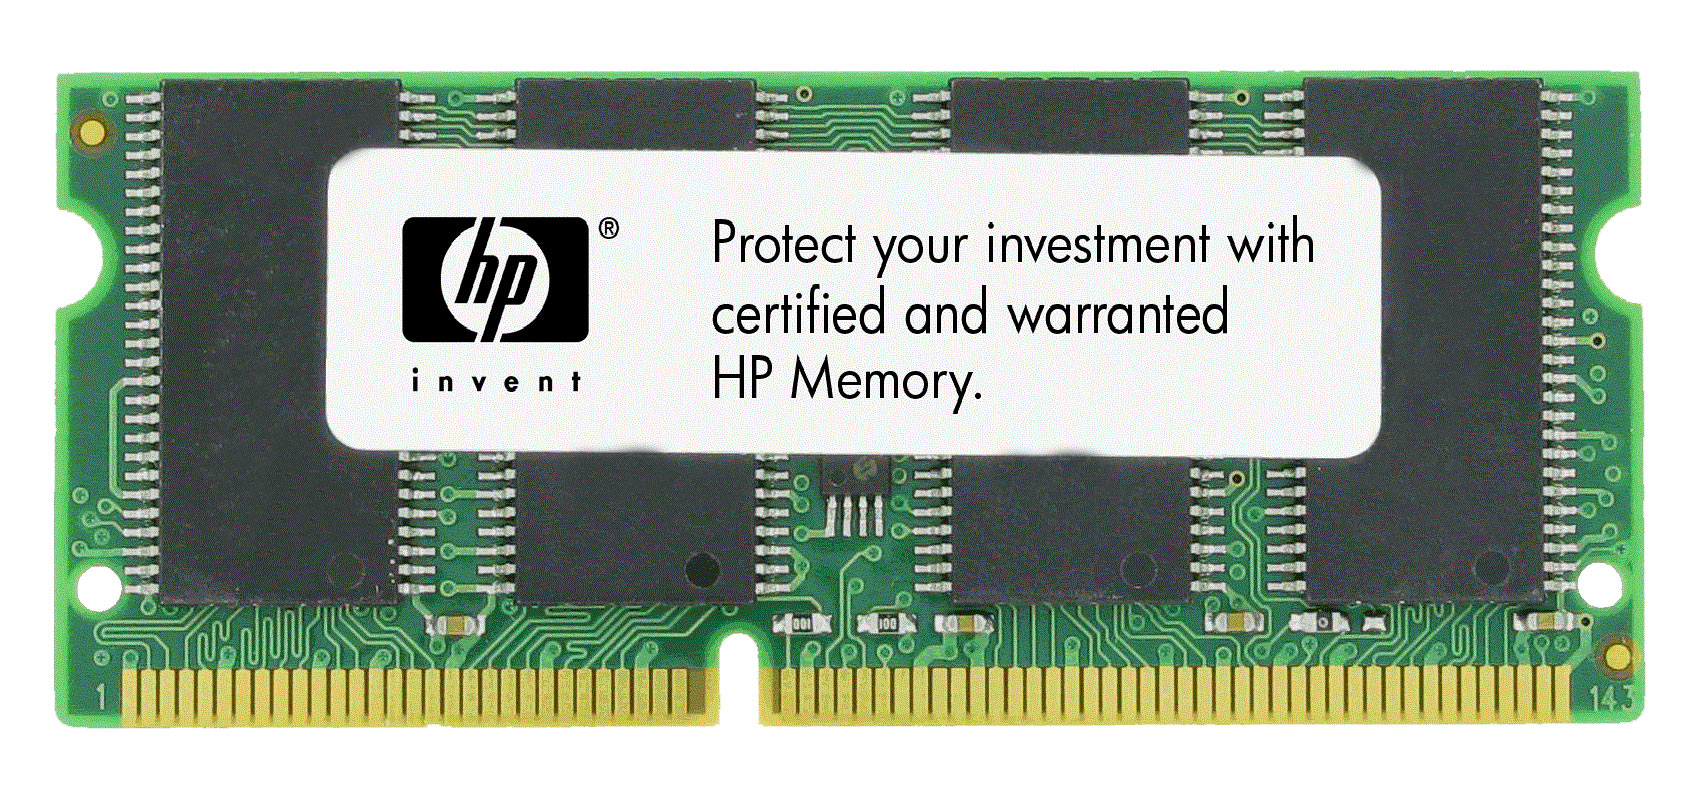 CB423AX HP 256MB PC2-4200 DDR2-533MHz non-ECC Unbuffered CL4 144-Pin DIMM Memory Module for LaserJet P2015 / P3005 Series Printer